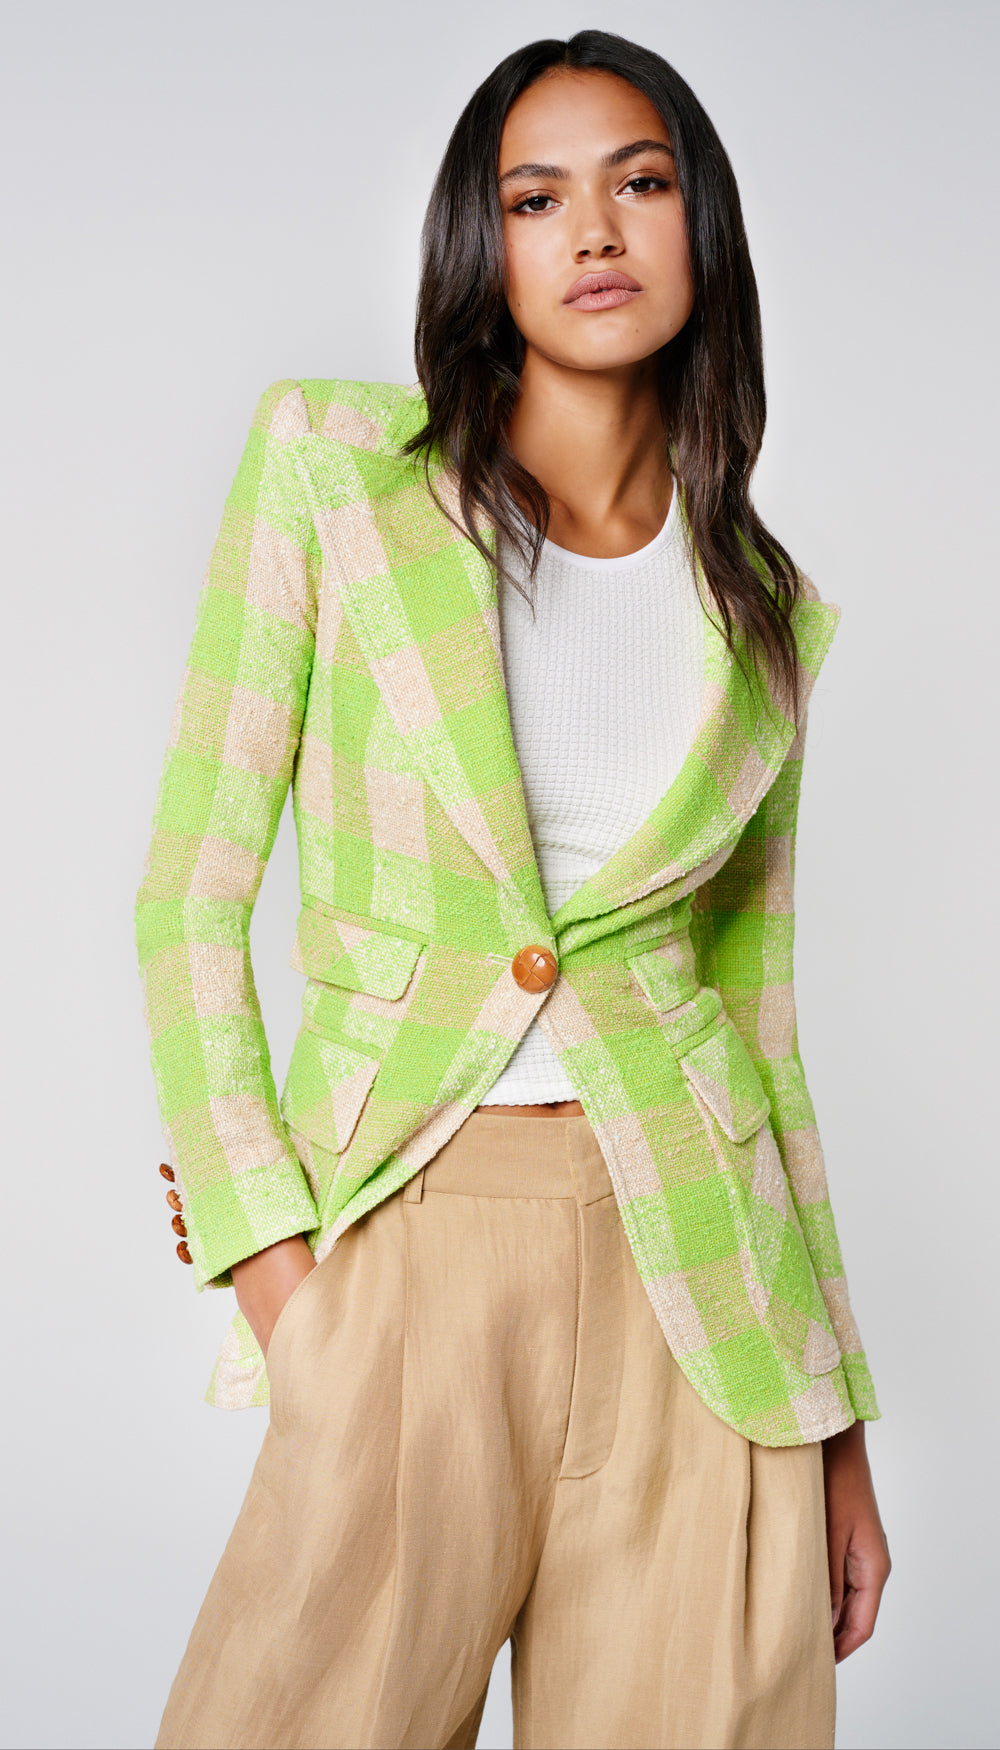 A woman in a green check blazer.